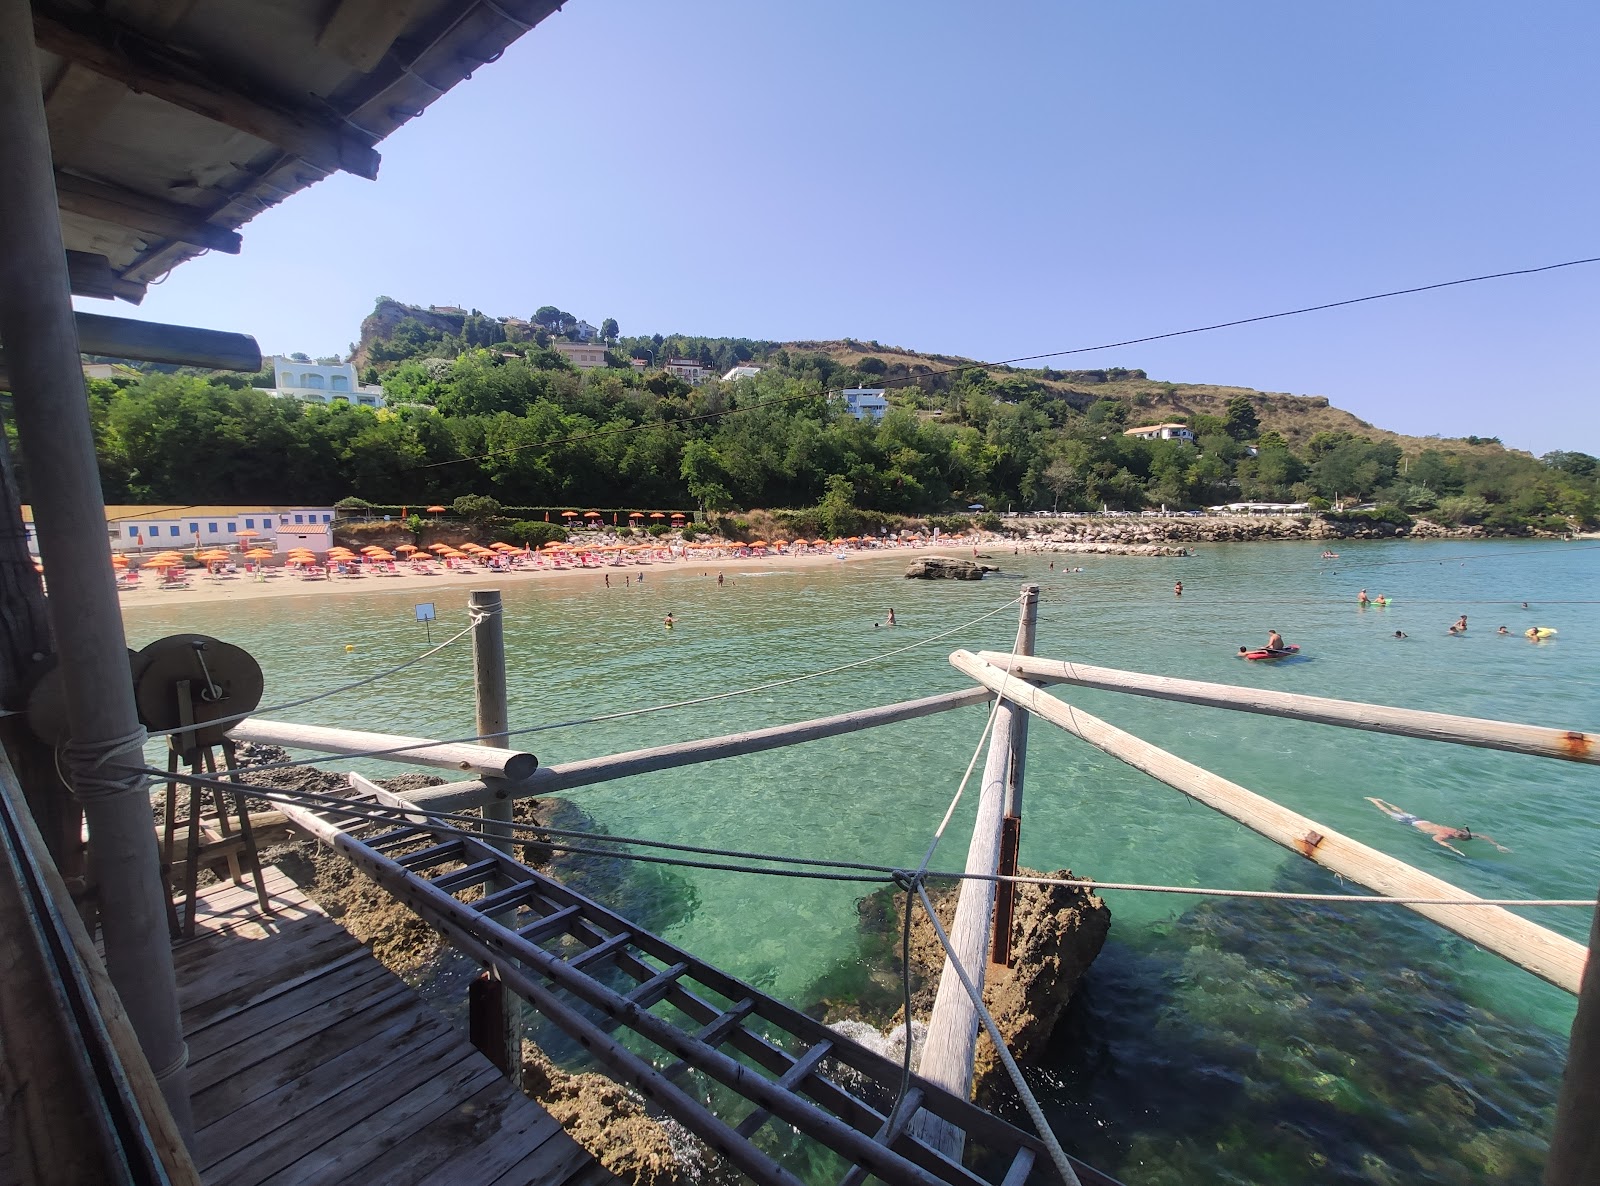 Spiaggia di Cavalluccio'in fotoğrafı parlak kum yüzey ile